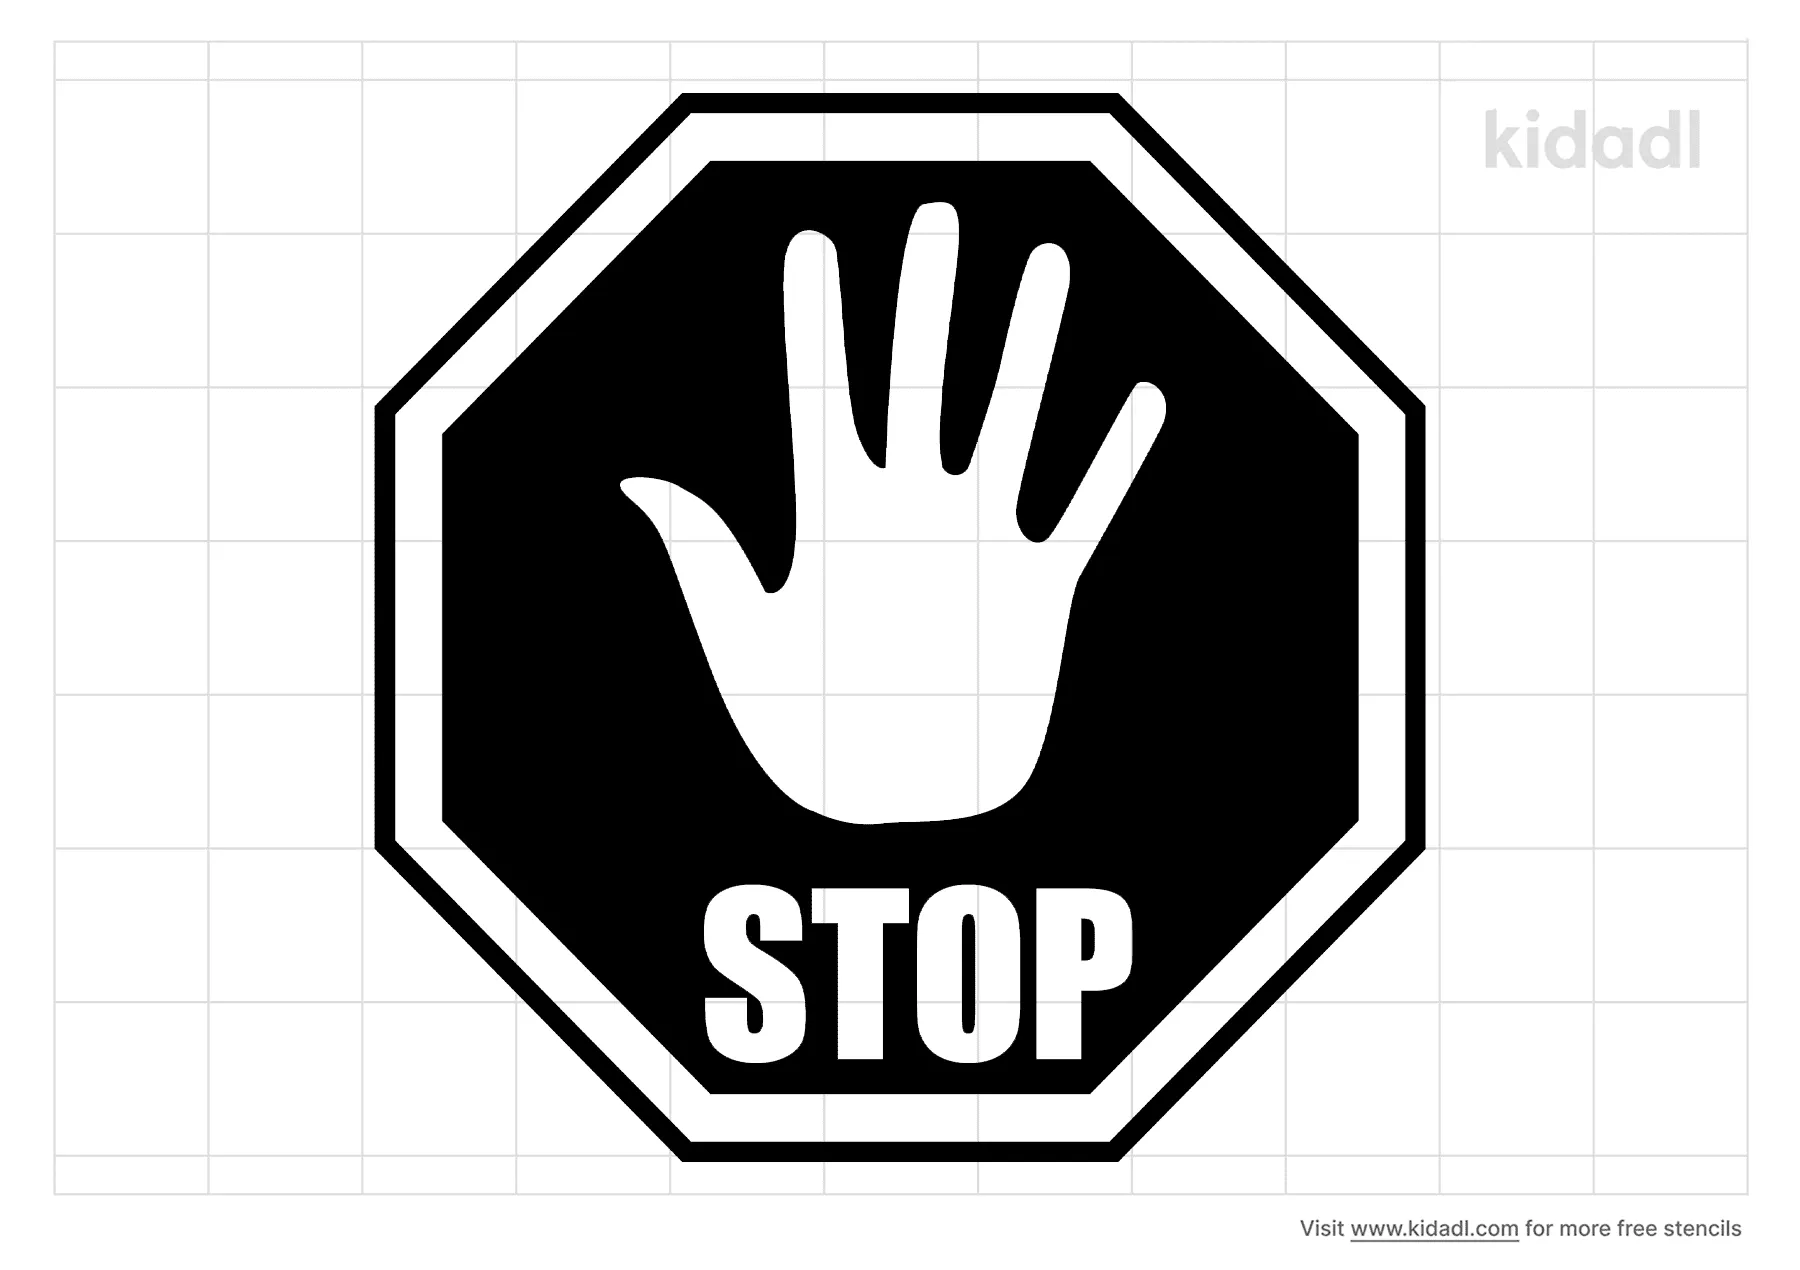 hand stop sign stencils free printable emojis shapes signs stencils kidadl and emojis shapes signs stencils free printable stencils kidadl